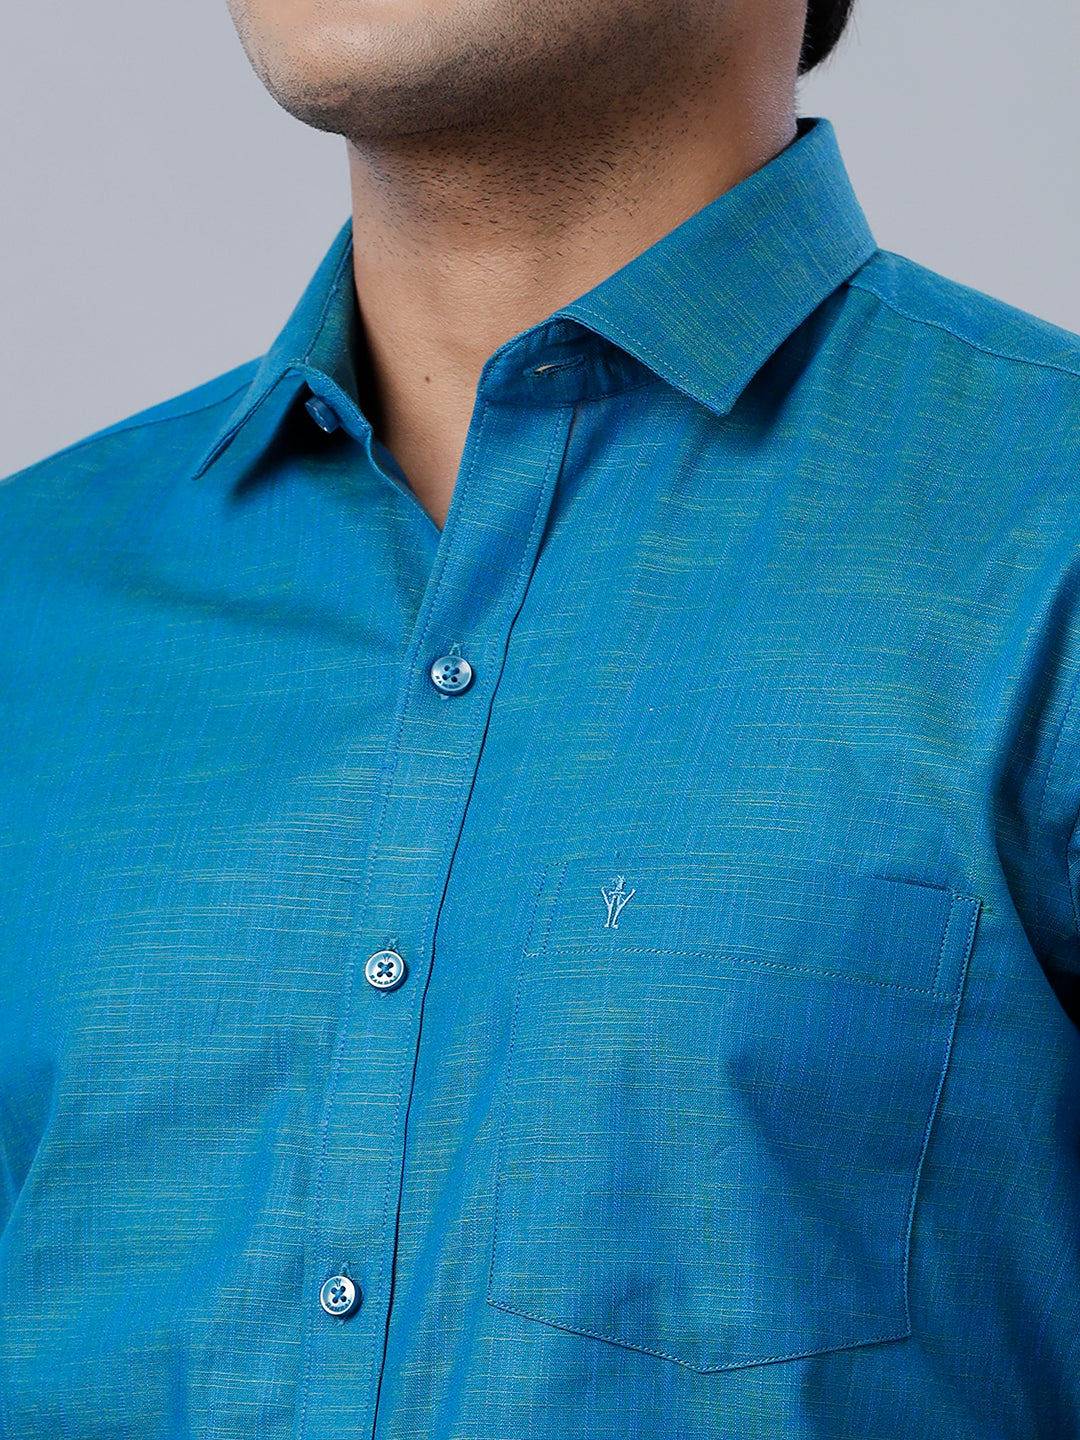 Mens Formal Shirt Half Sleeves Greenish Blue CL2 GT29-Zoom view